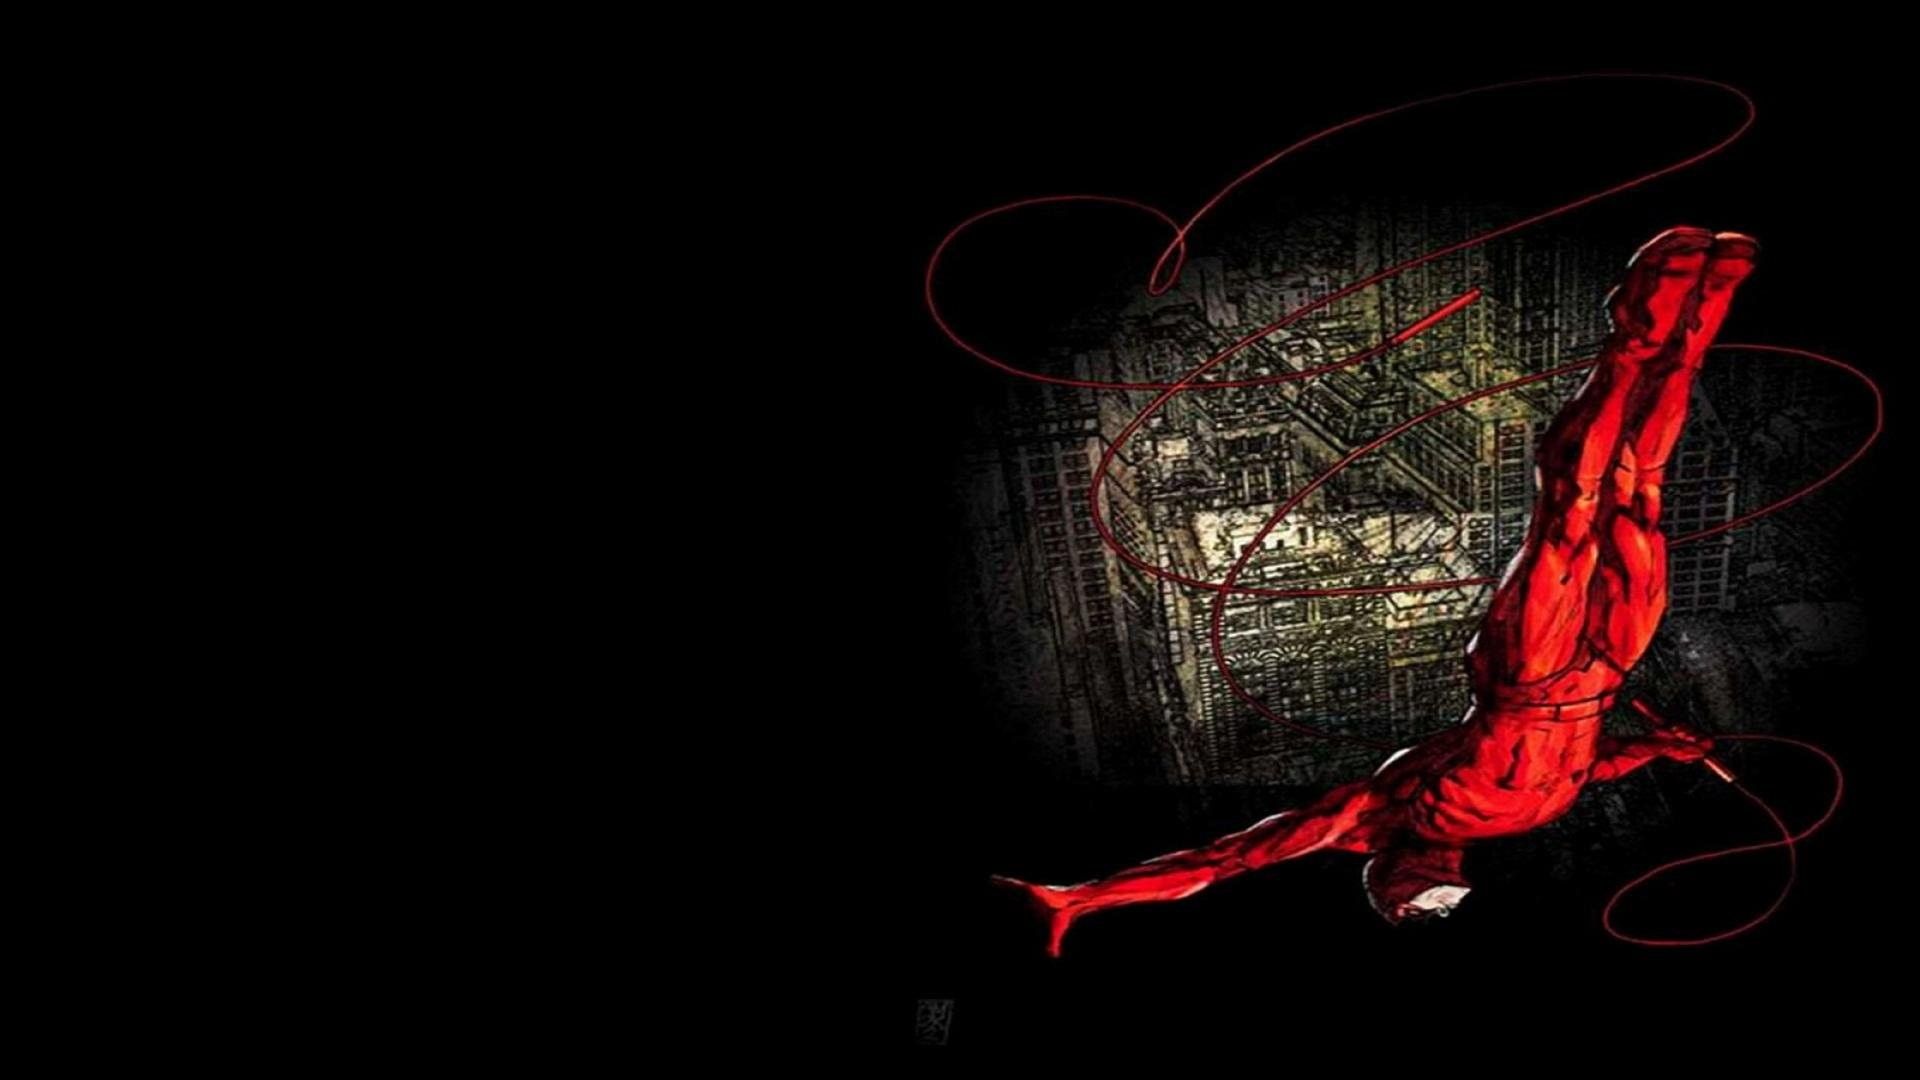 Daredevil Desktop Image, Poster, Background. Full HD Wallpaper